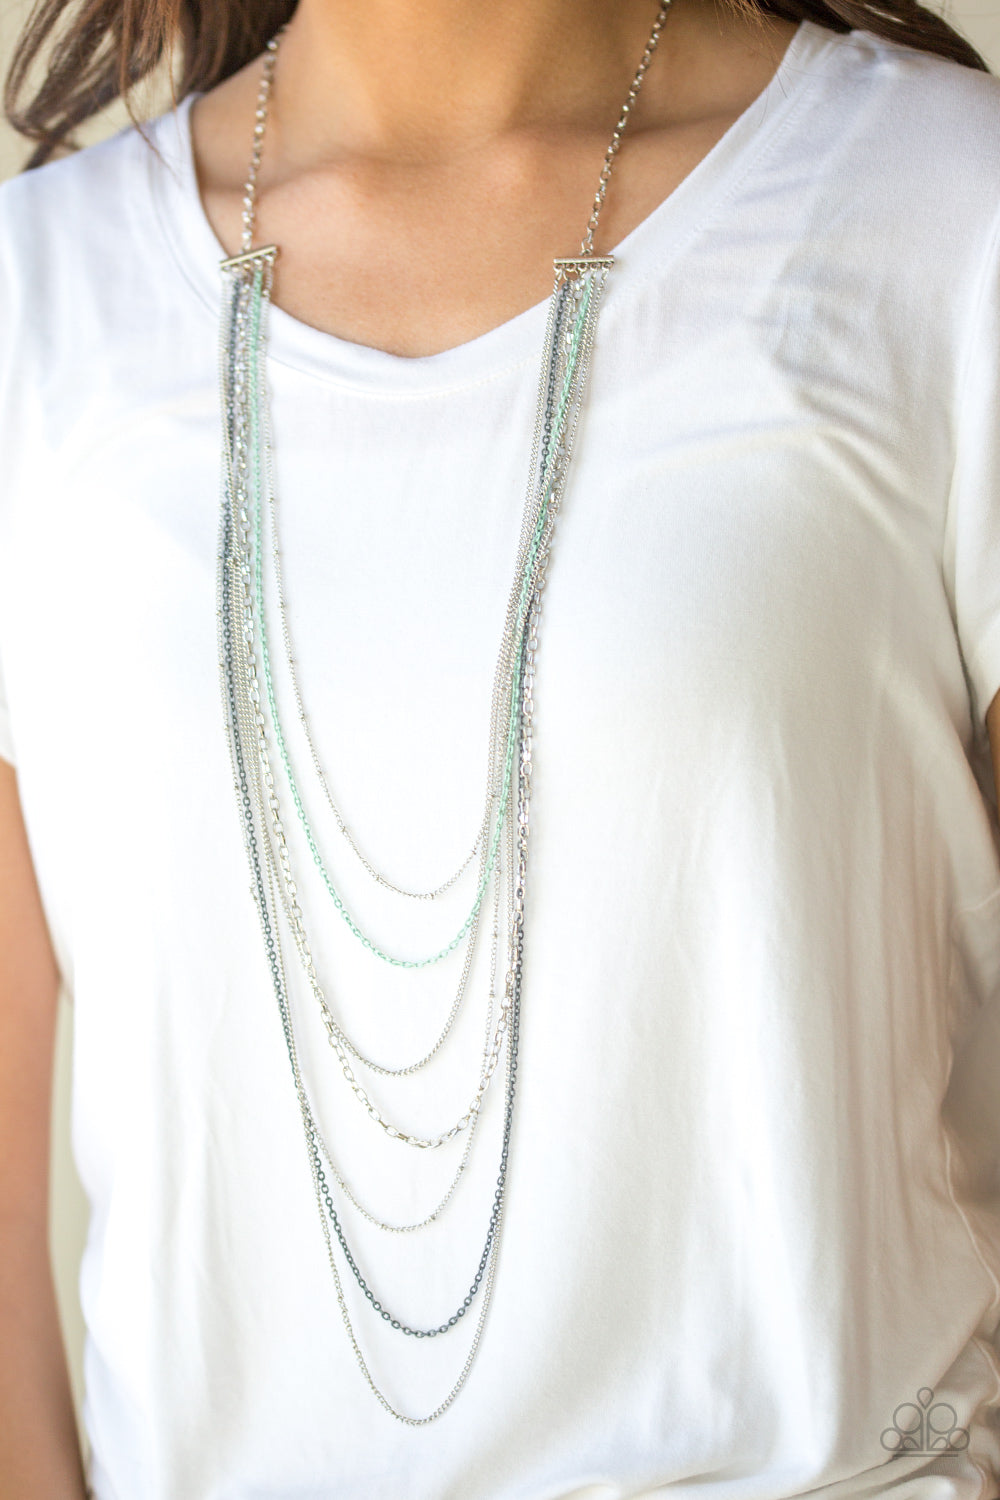 Paparazzi Radical Rainbows - Multi - Necklace & Earrings - $5 Jewelry With Ashley Swint